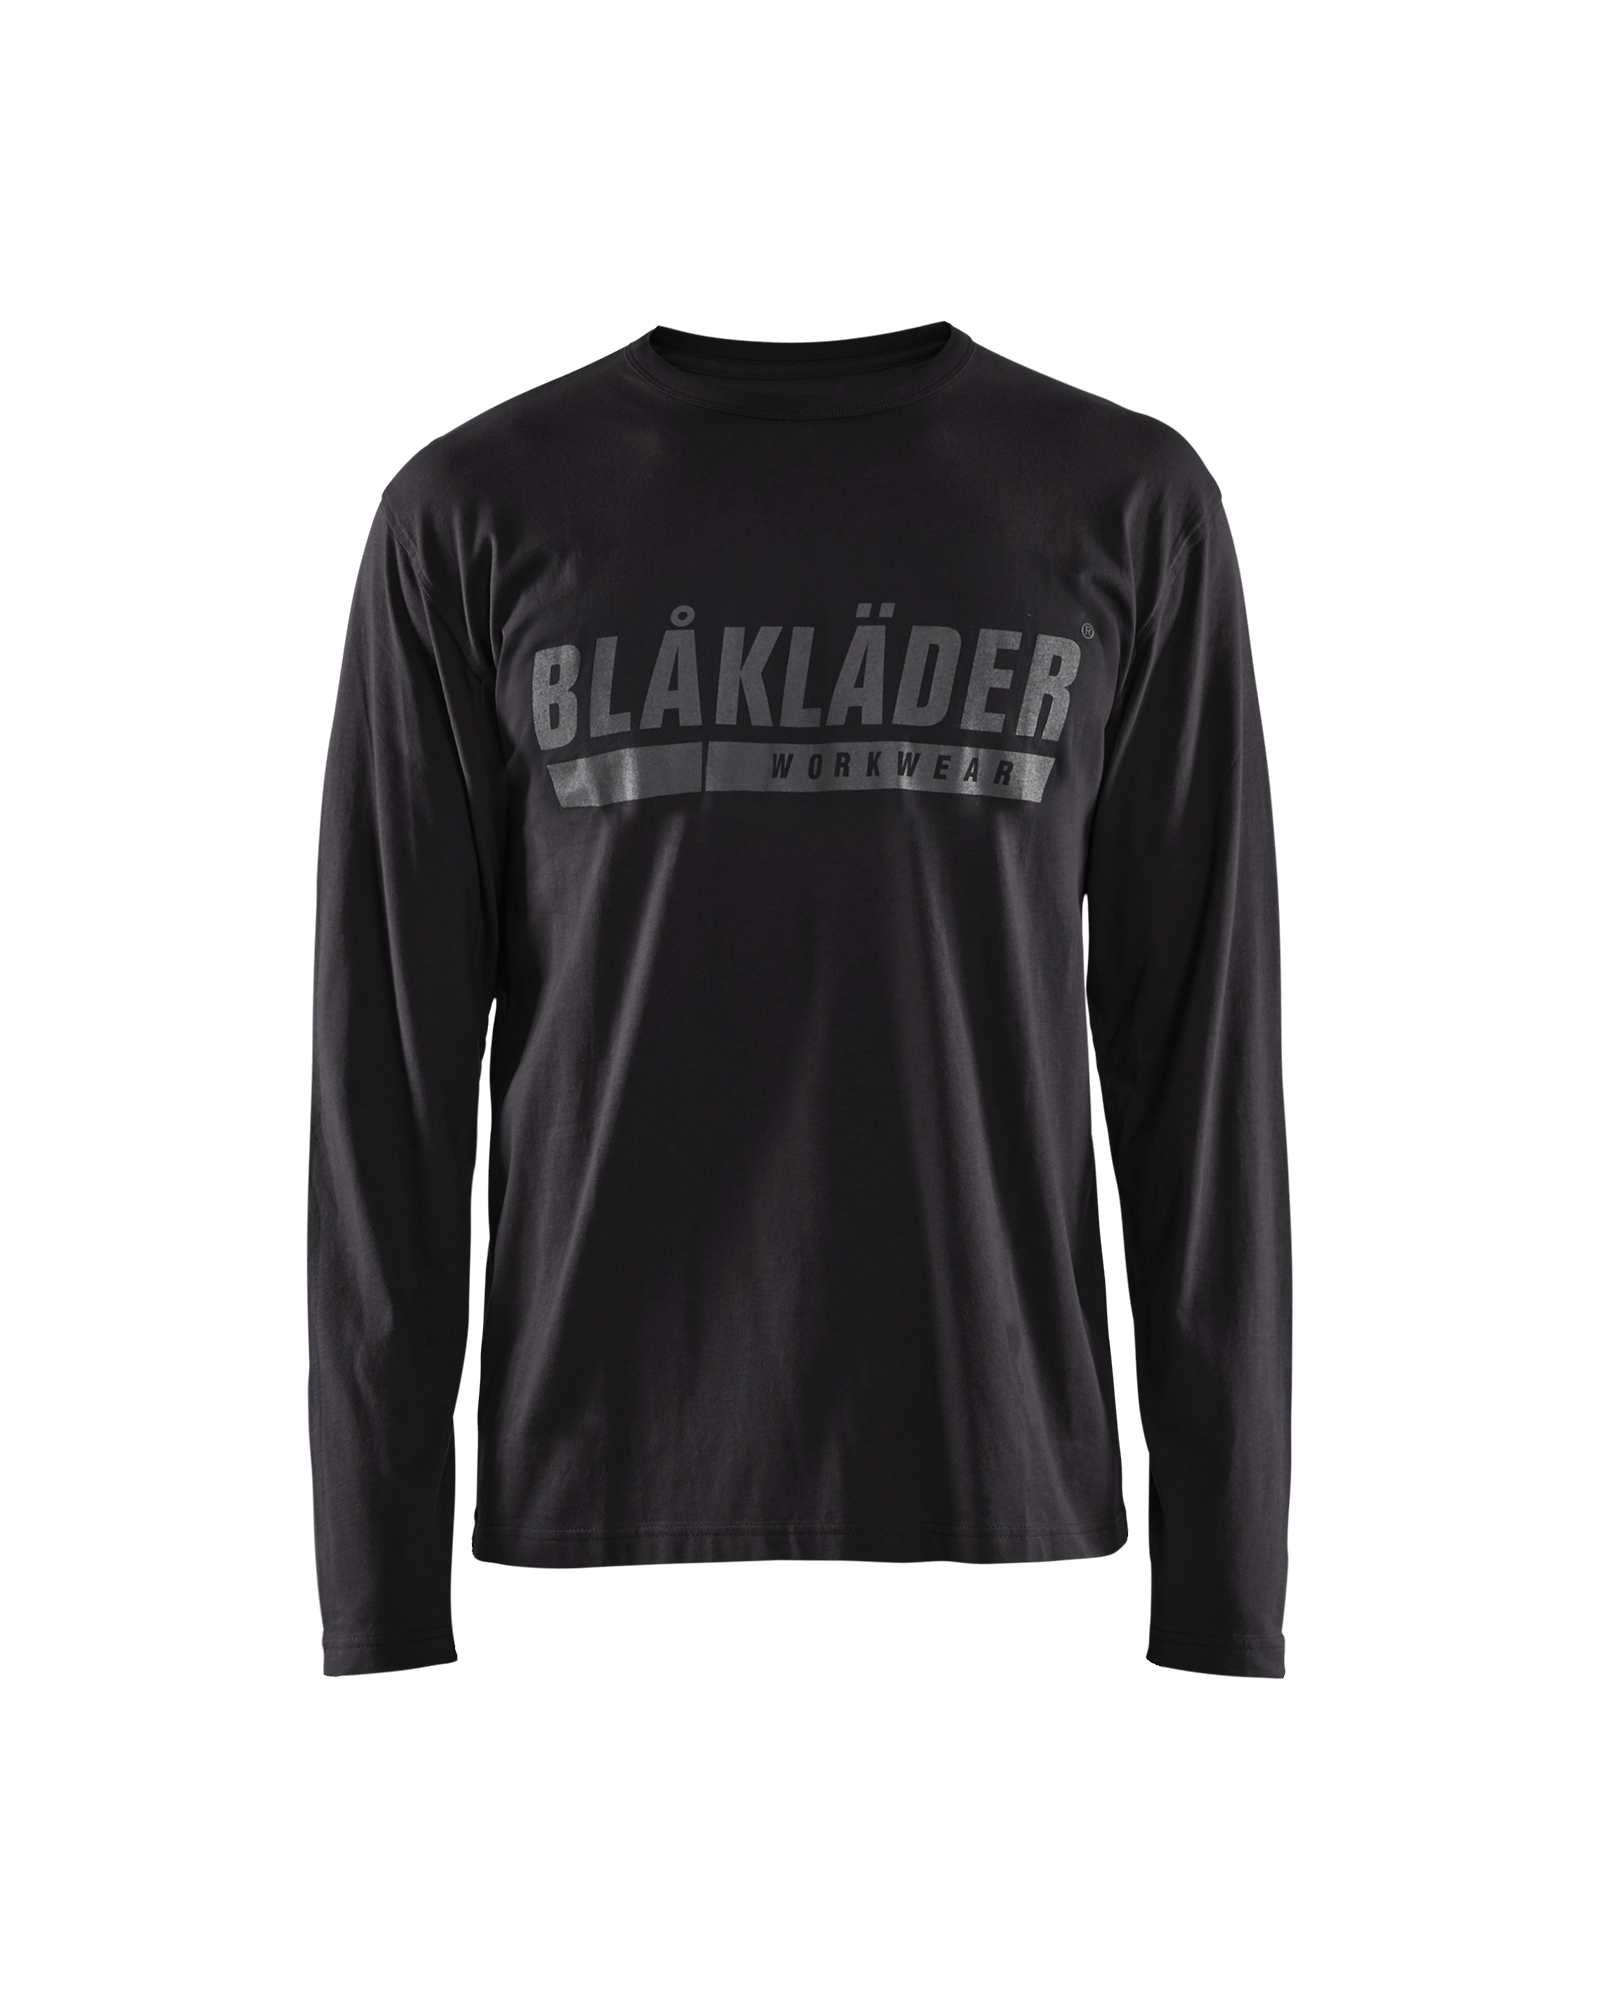 Blaklader Workwear Canada (355710429900L)